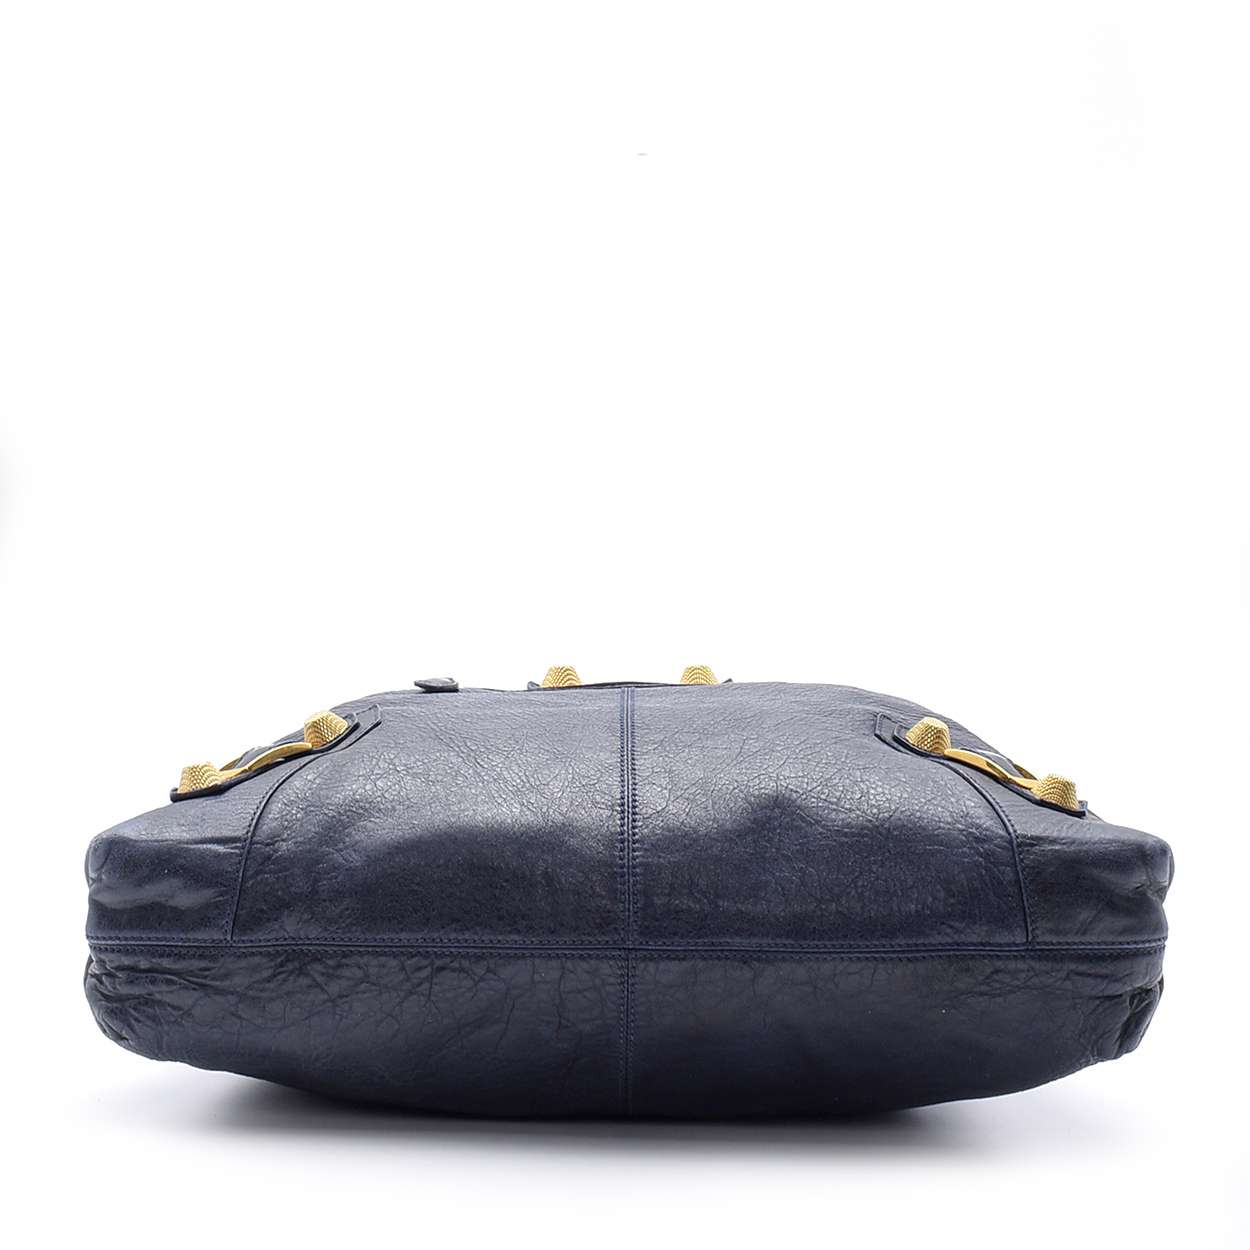 Balenciaga - Navy Blue Lambskin Leather Giant Velo Bag